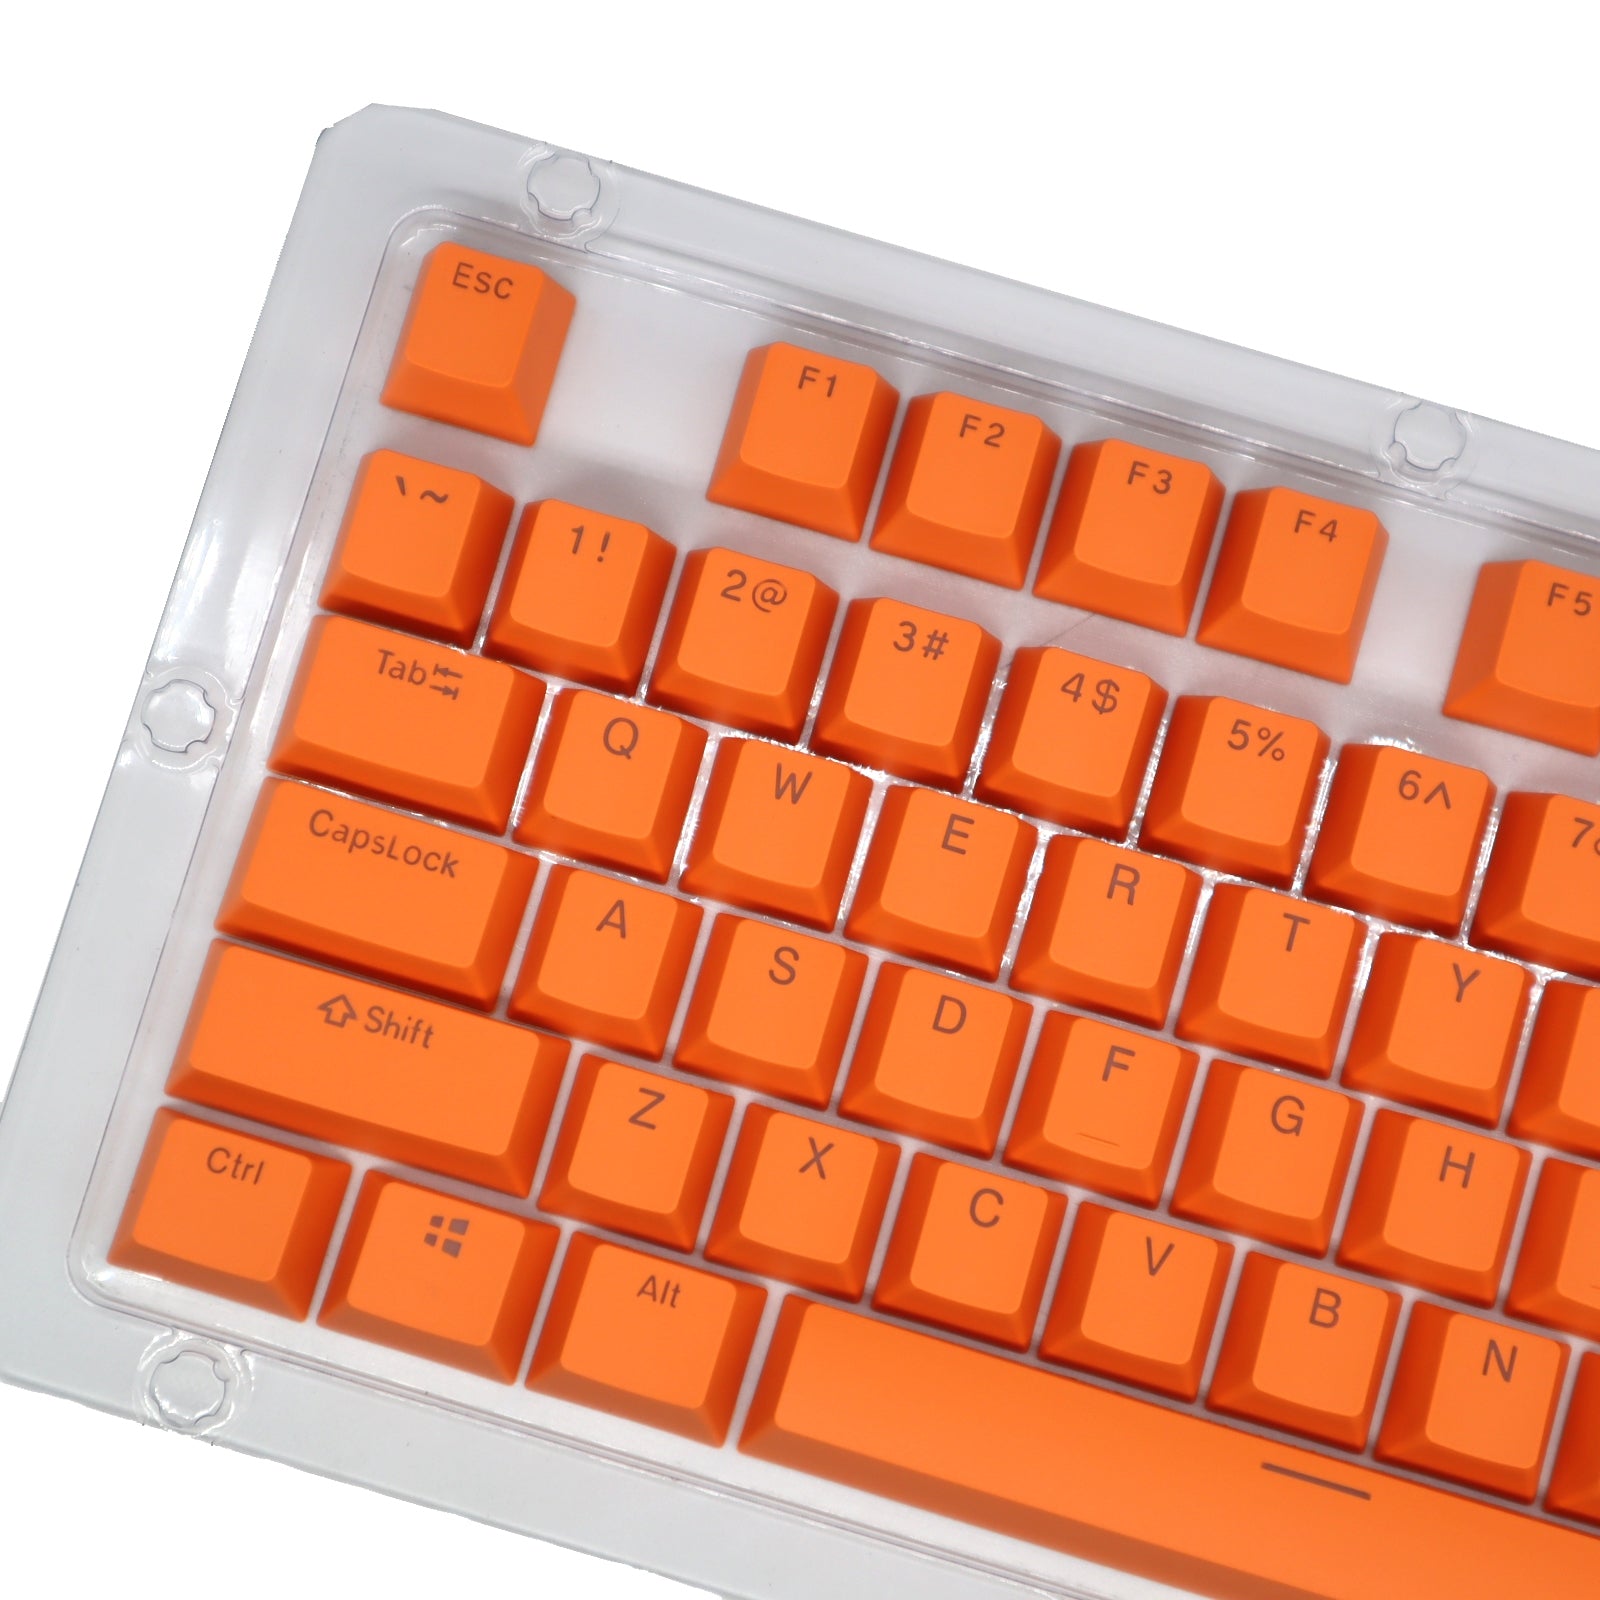 Orange PBT Keycaps